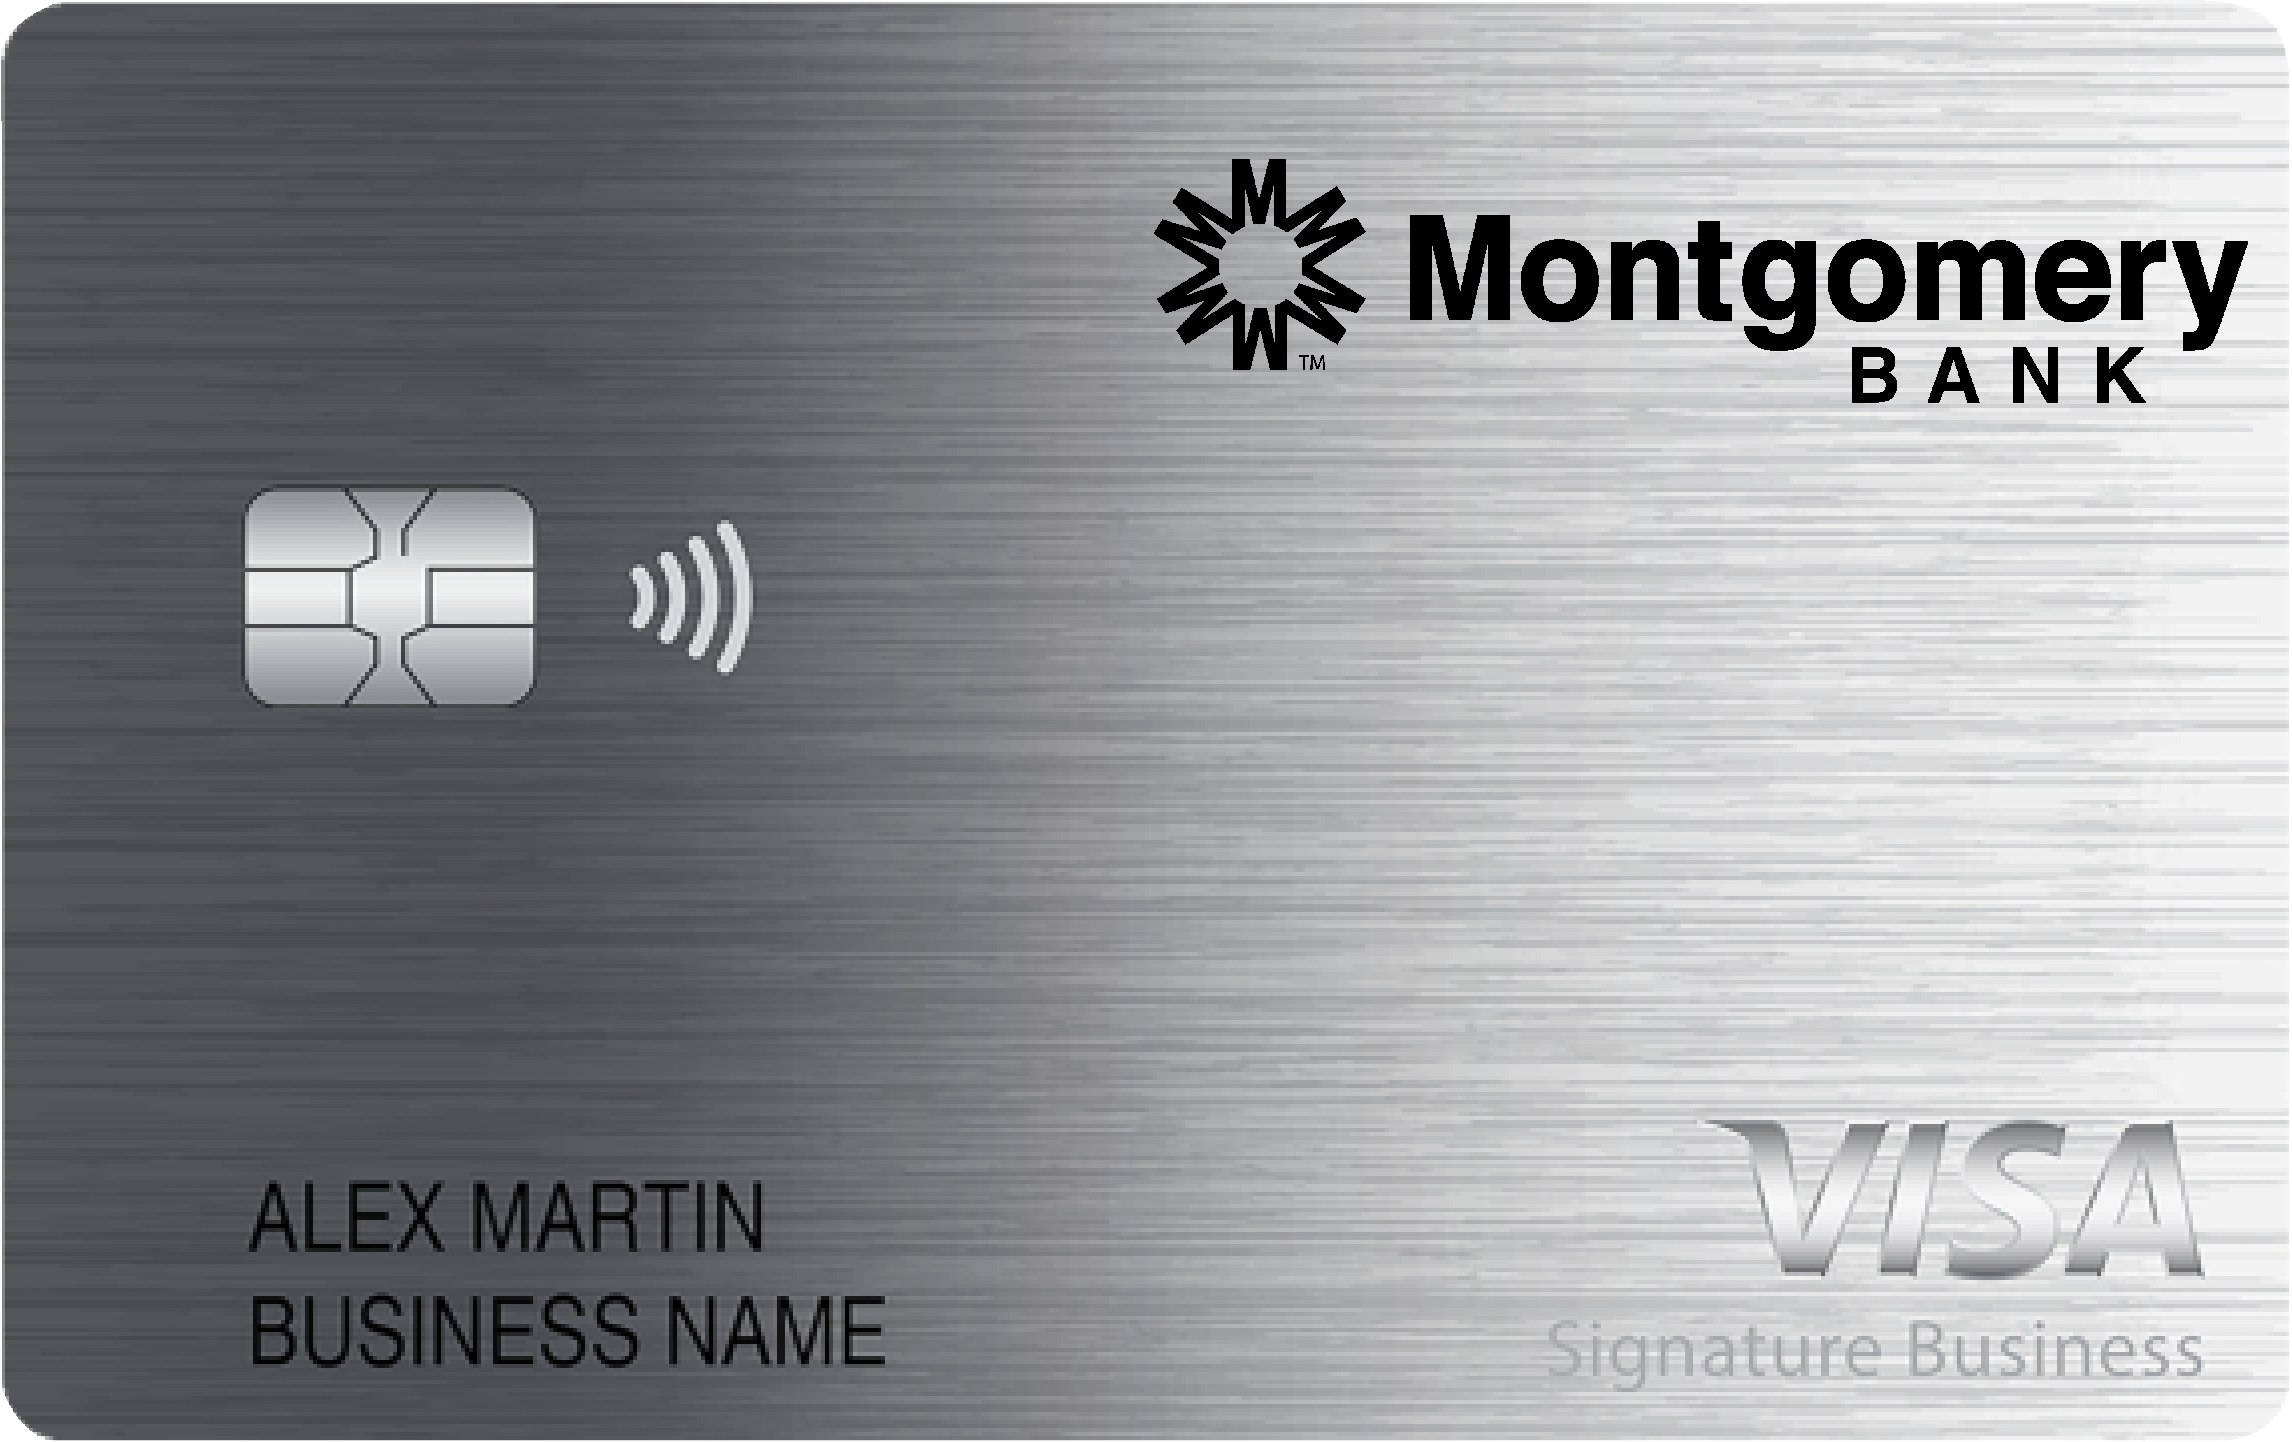 Montgomery Bank Smart Business Rewards Card